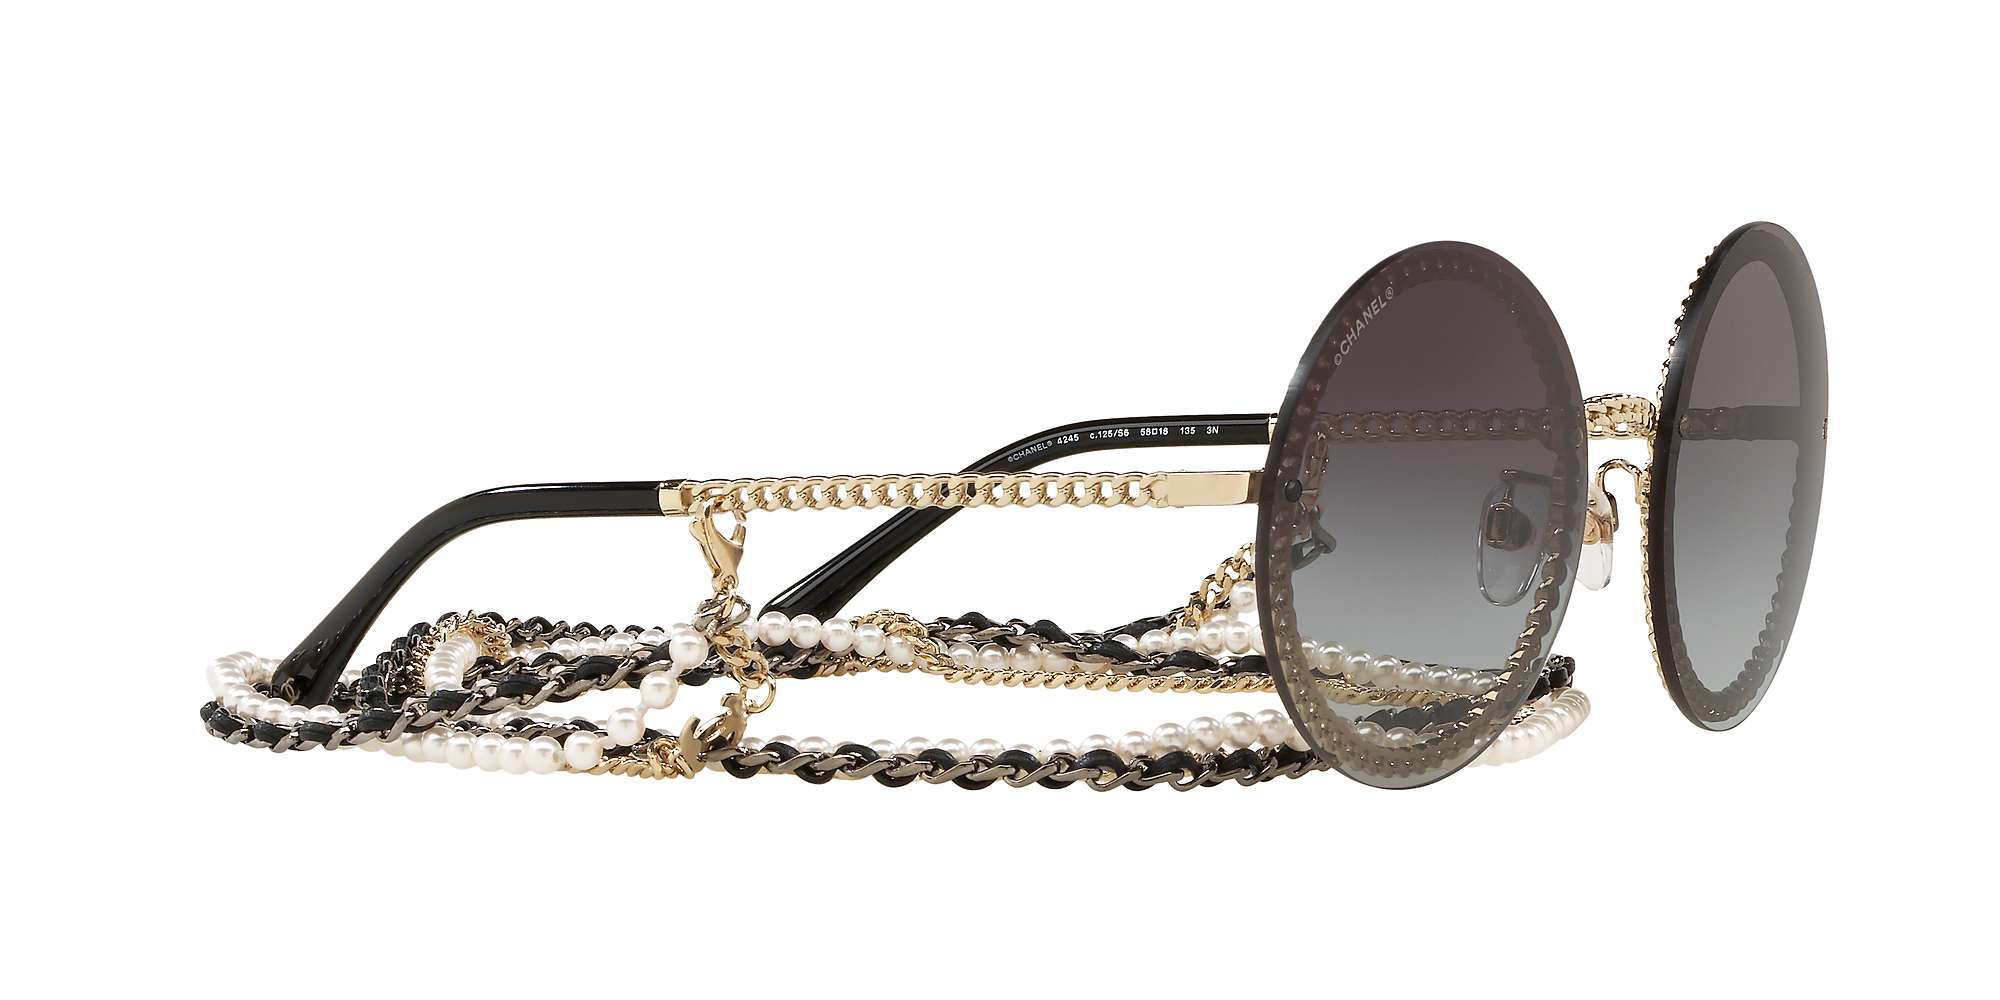 Chanel 4244 C395/S6 Sunglasses - US